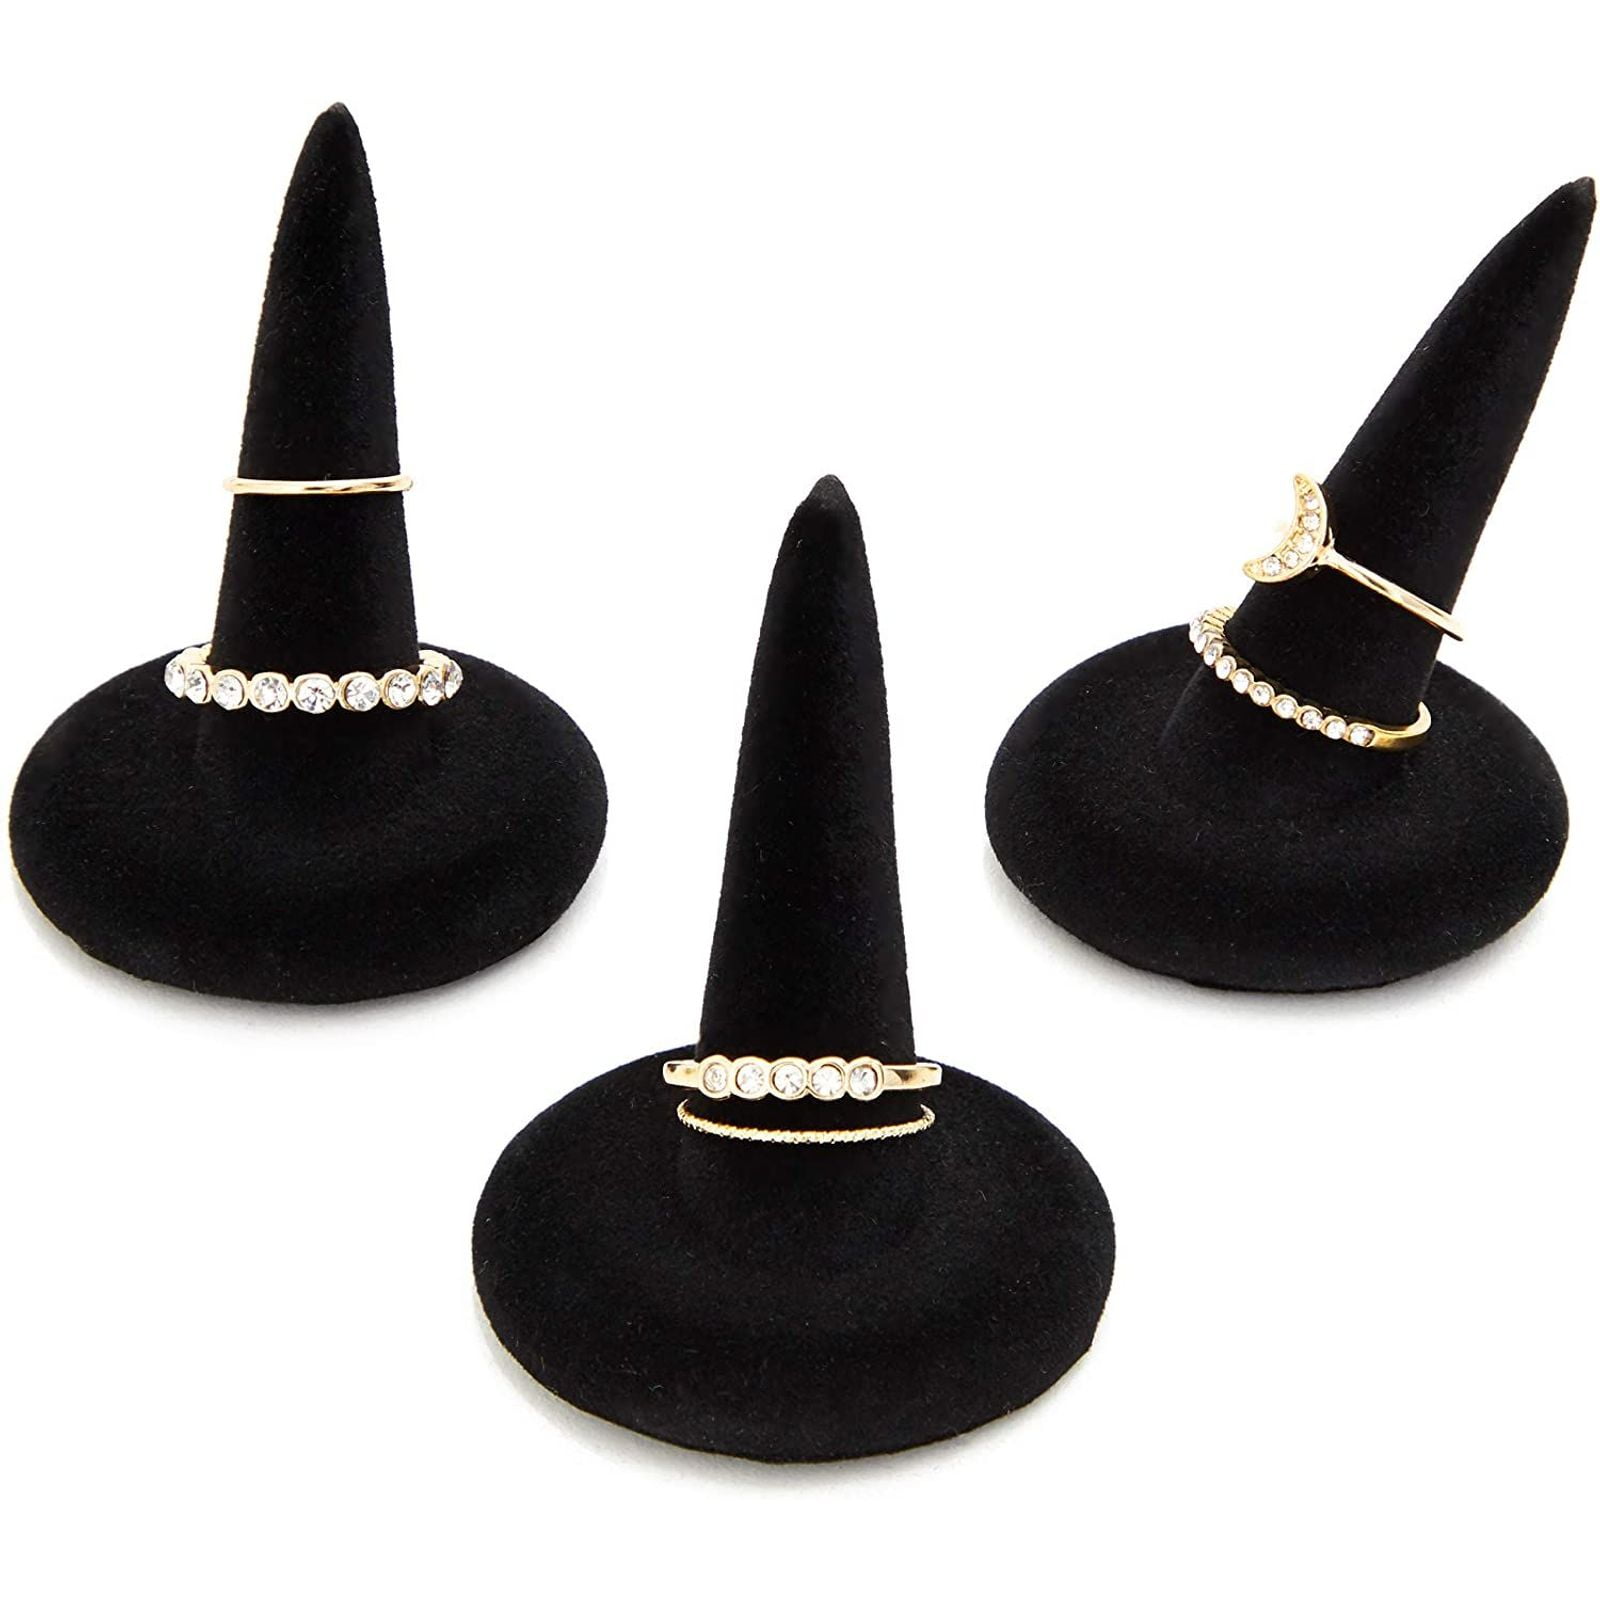 3x Black Velvet Single Ring Jewelry Display Stand Showcase Holder Finger Stand 